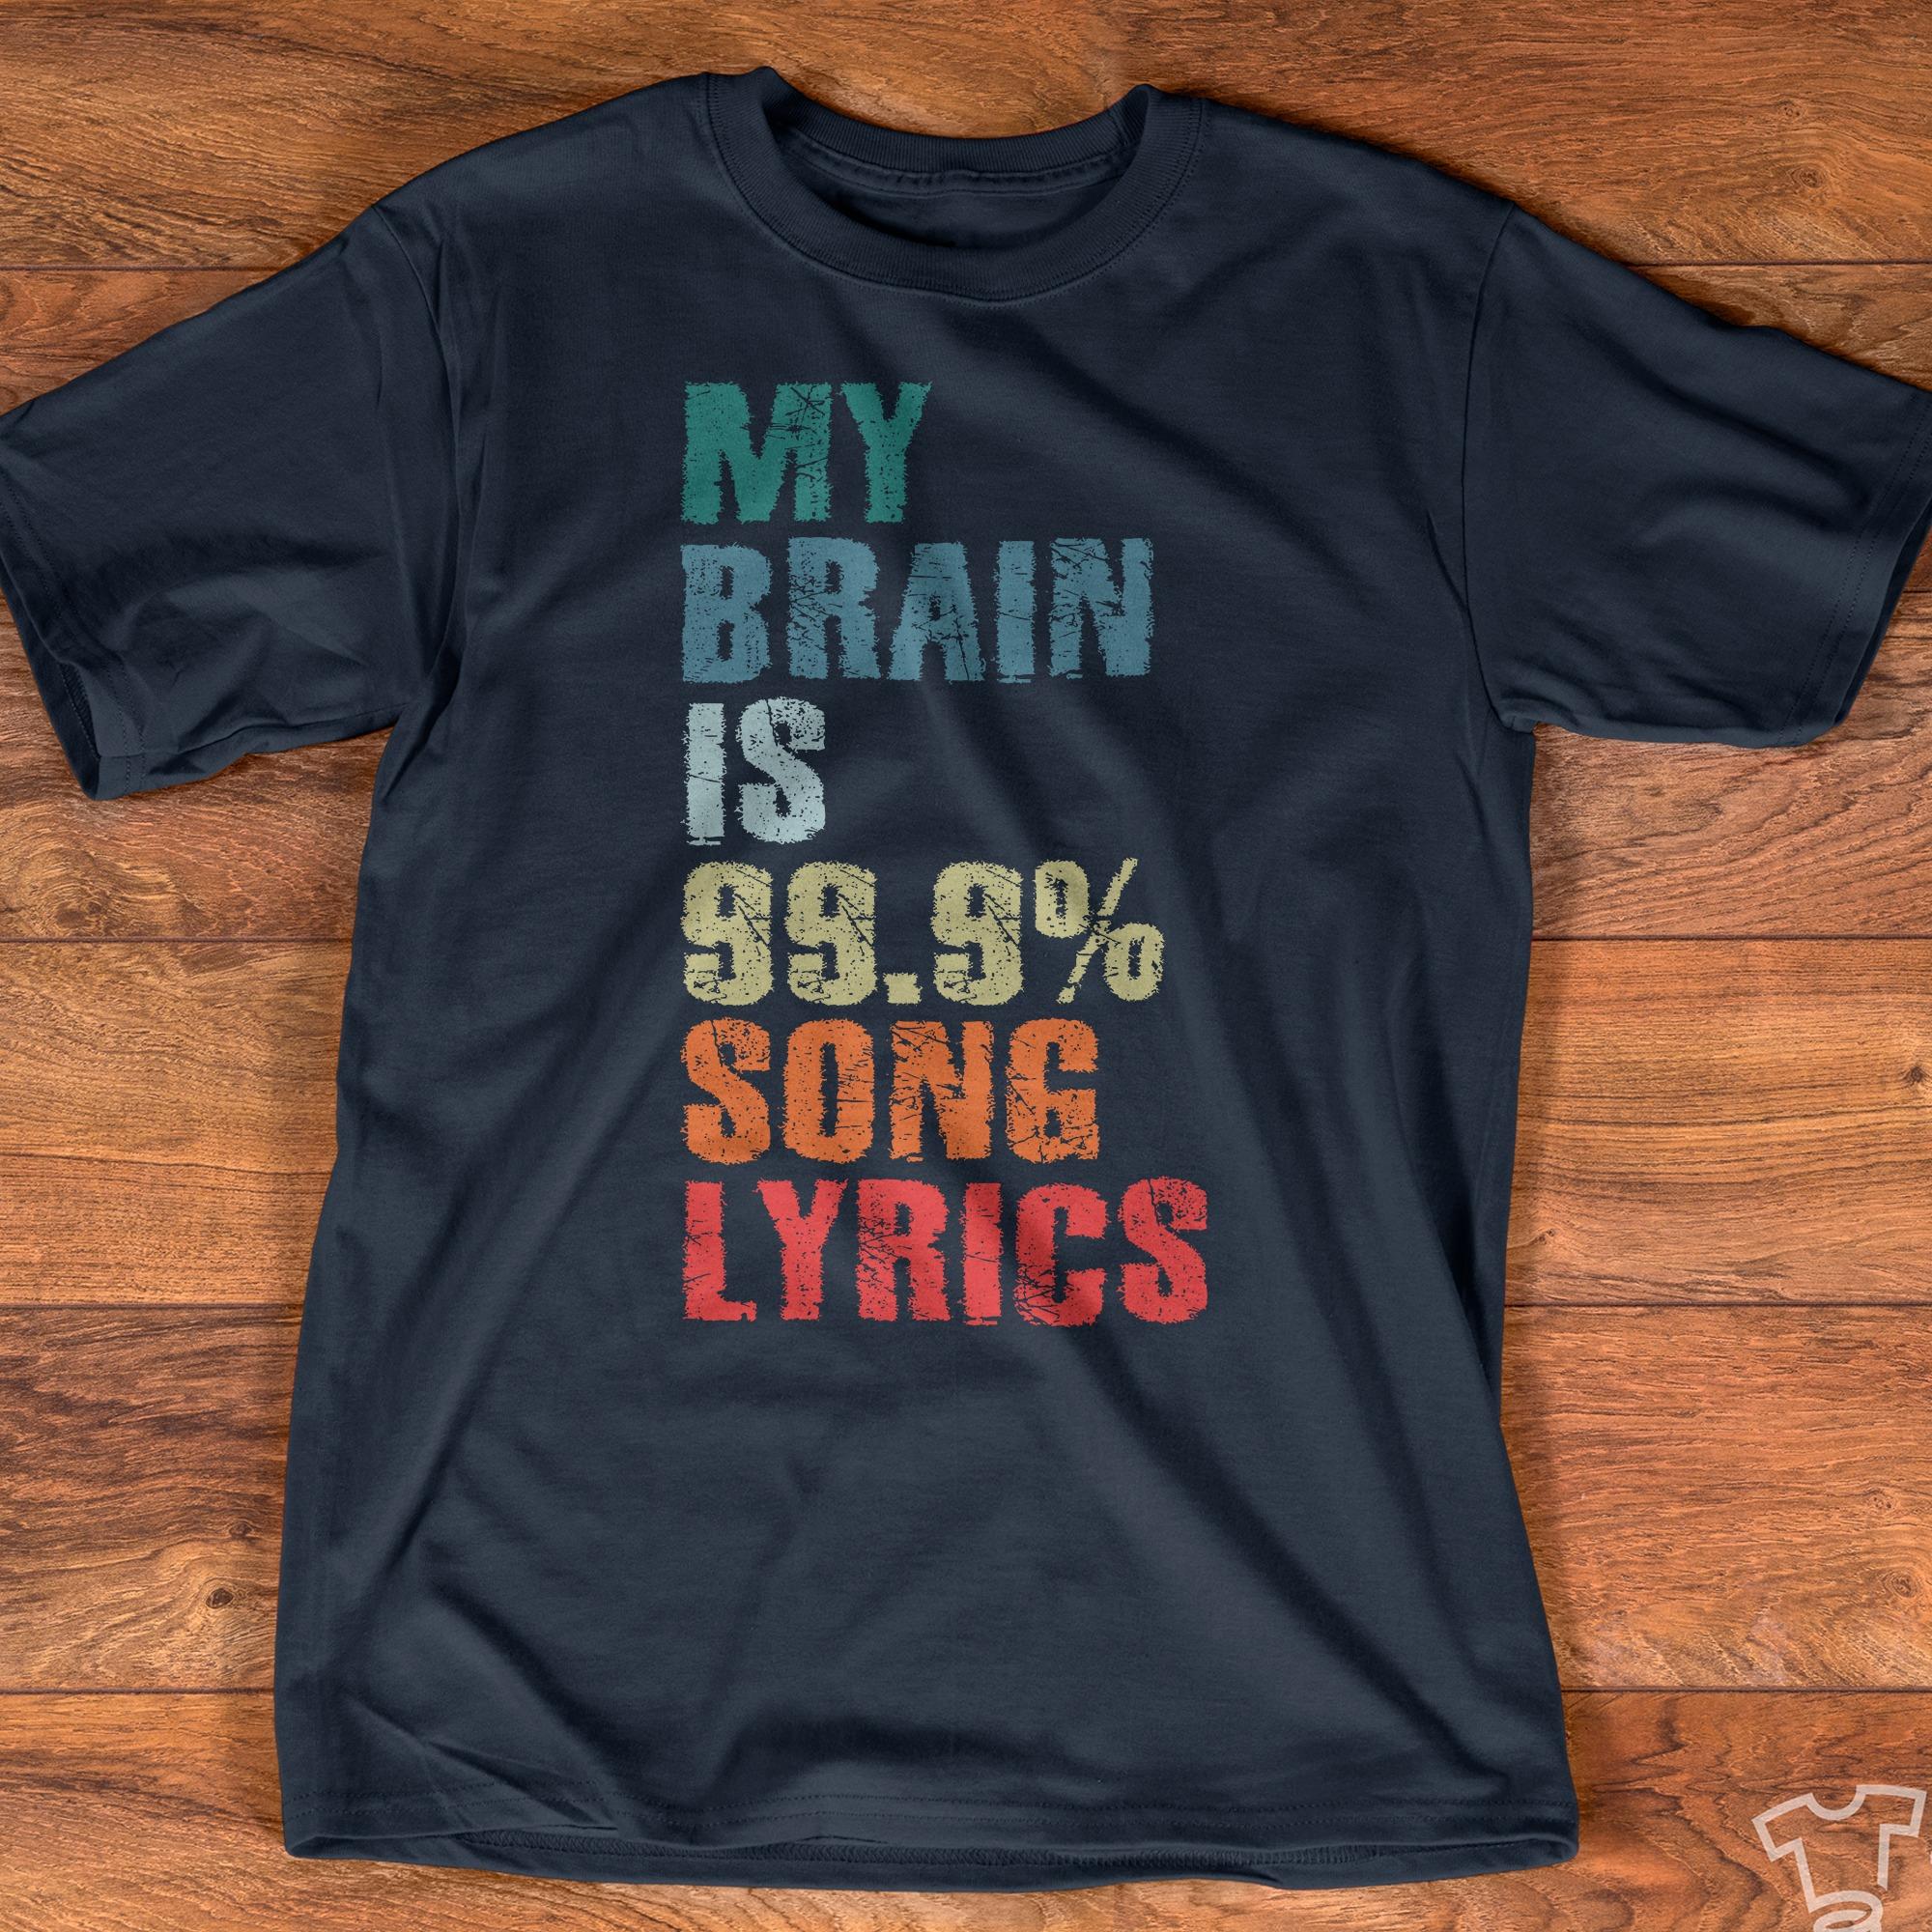 My brain is 99.9% song lyrics - Music Lover